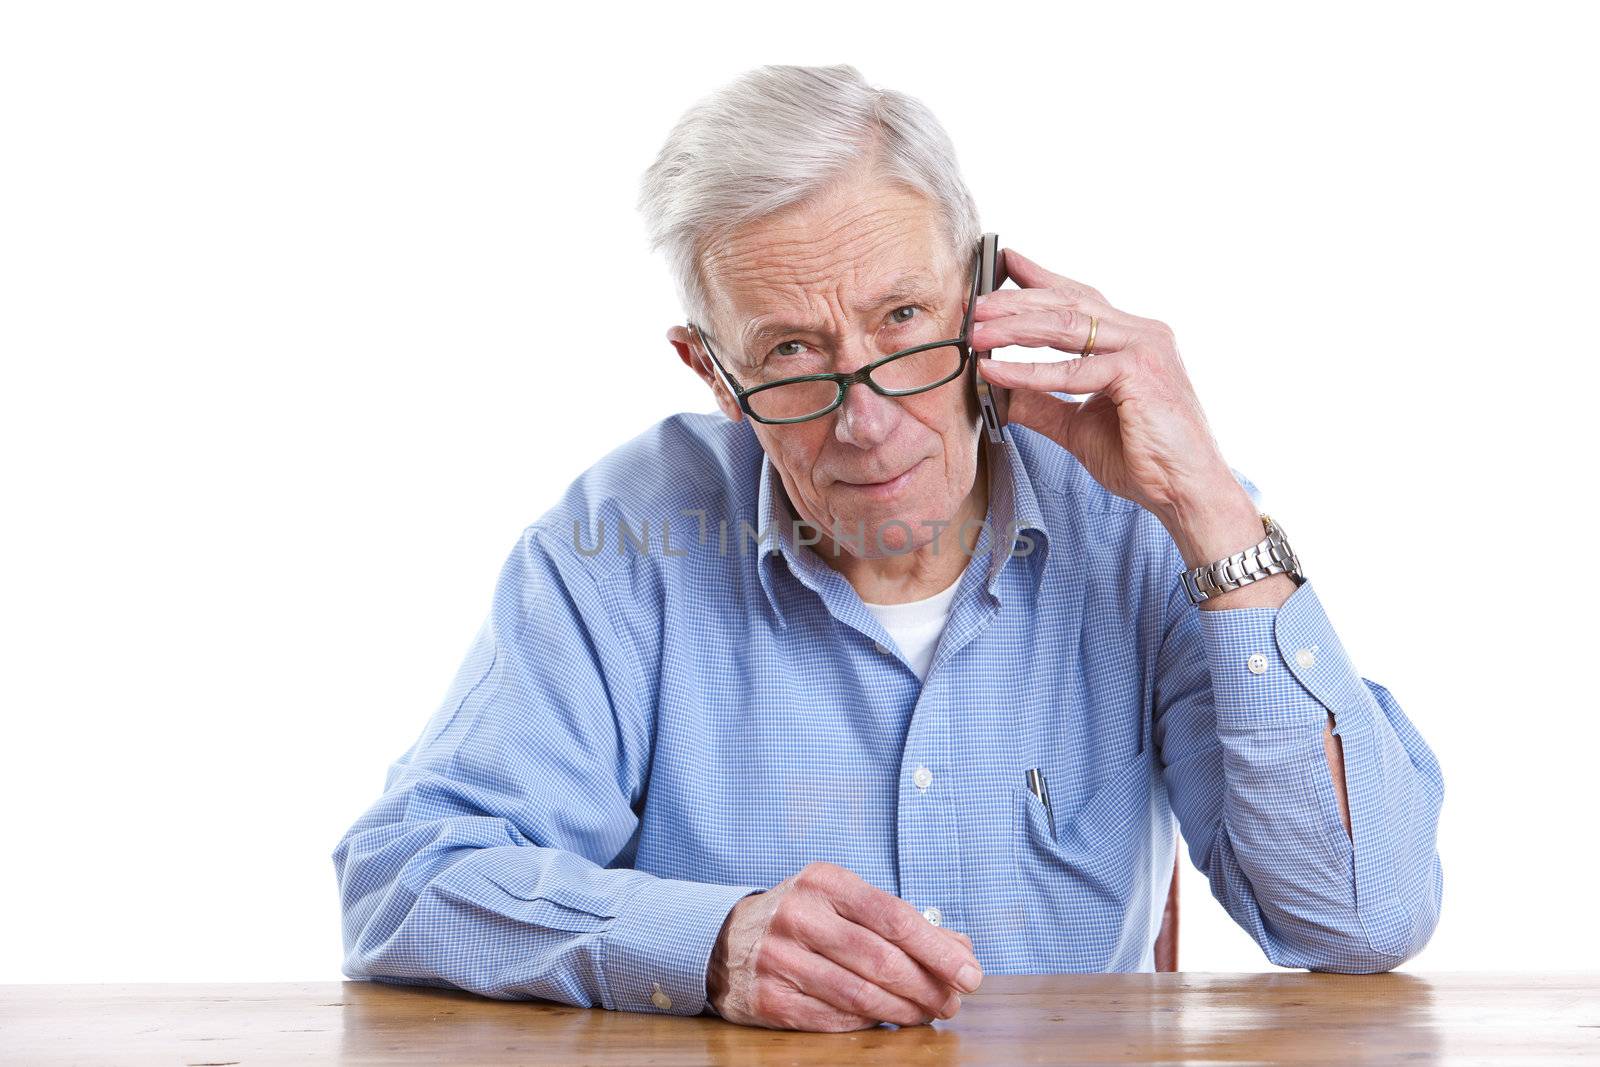 Senior man on the phone looking serioius on white background